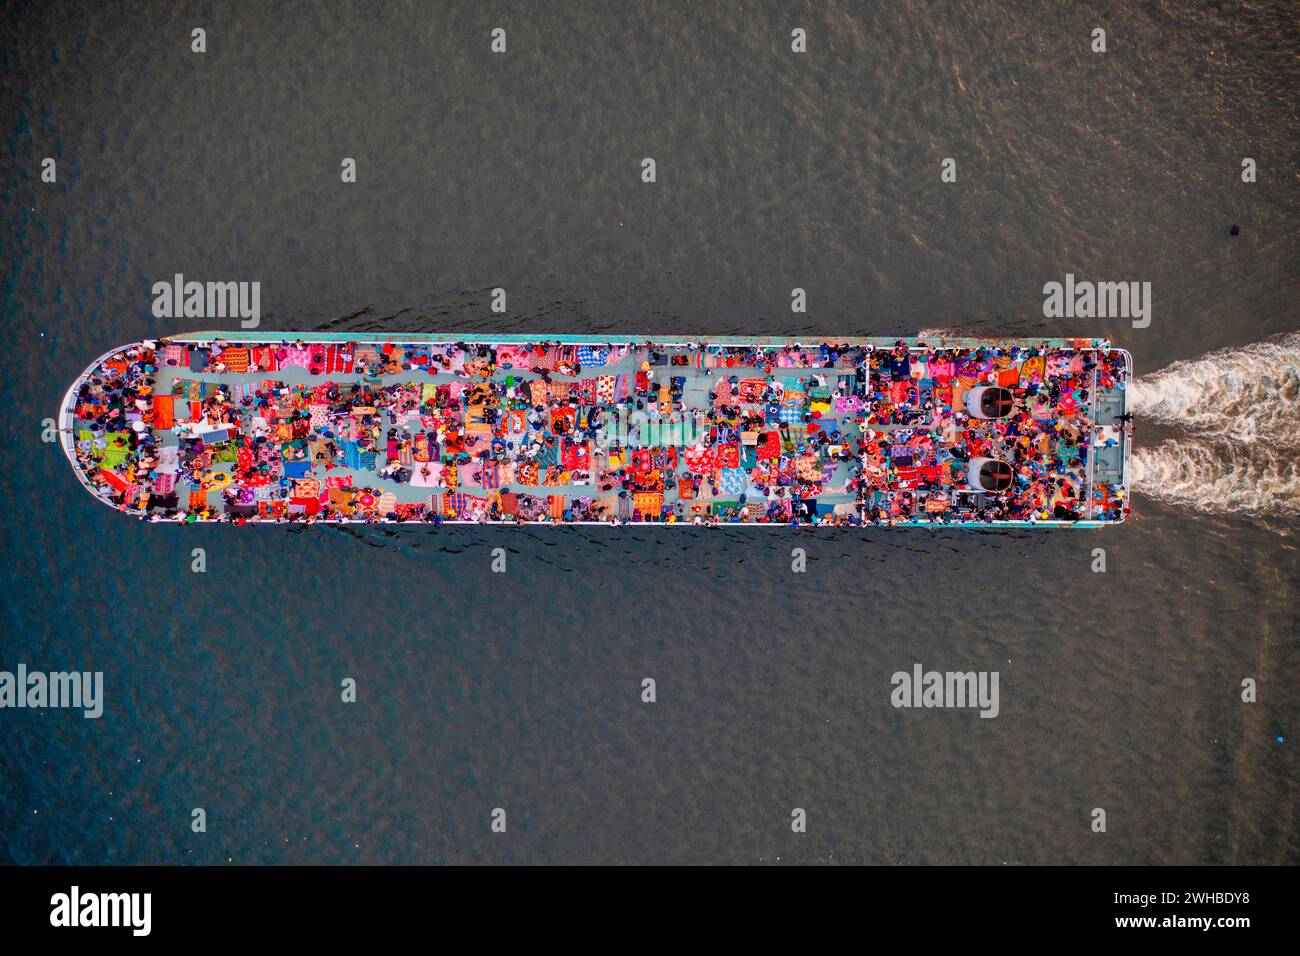 Aerial view of people onboard of a passenger ship along Buriganga river, Dhaka, Bangladesh. Stock Photo